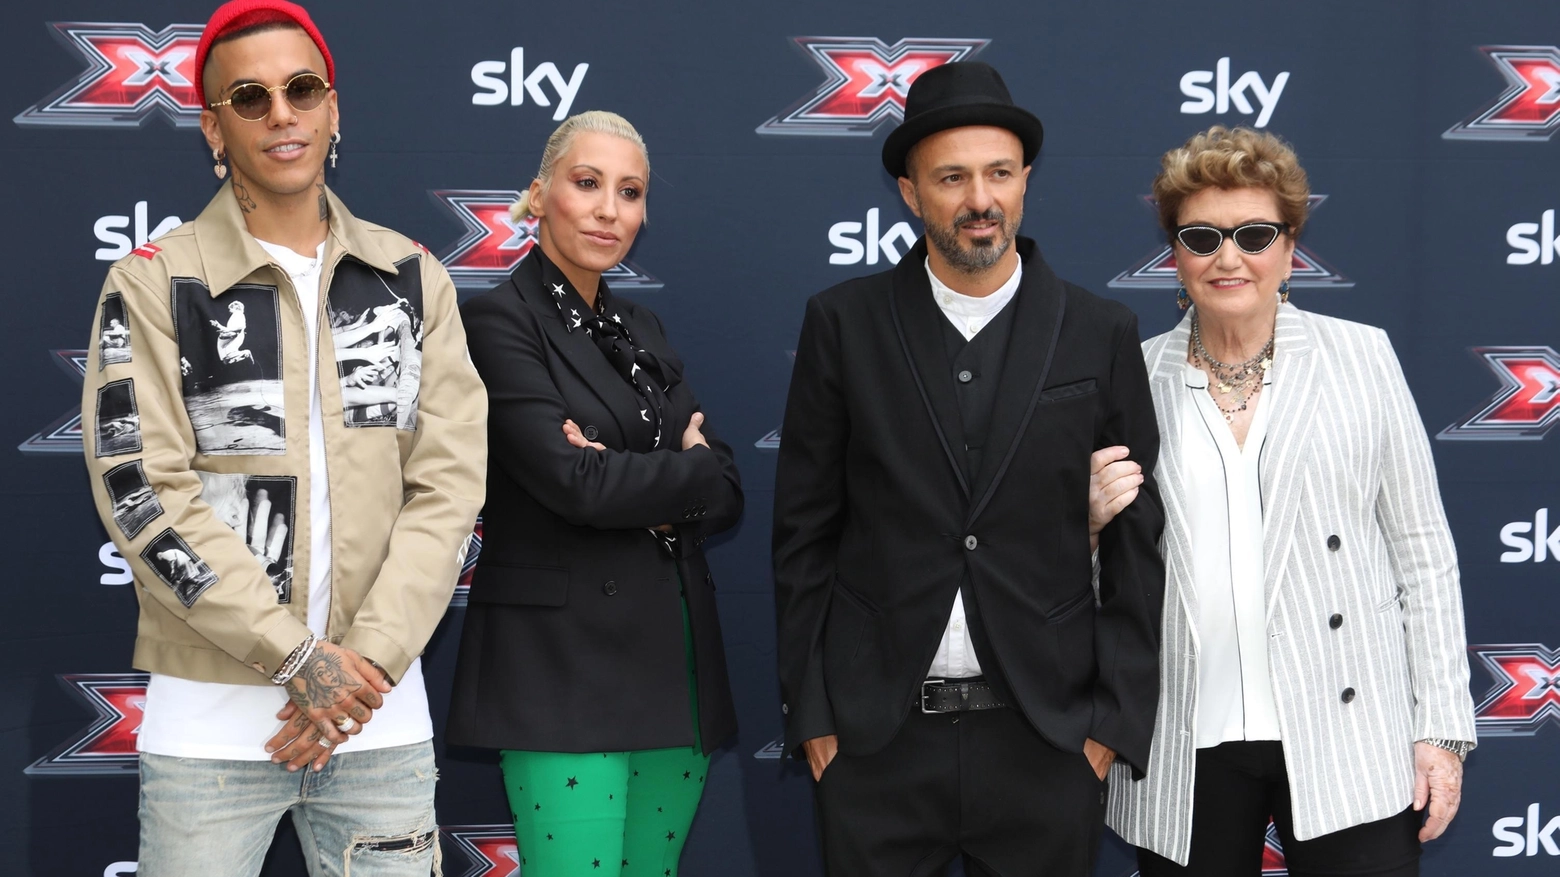  I nuovi giurati di X Factor: Sfera Ebbasta, Malika Ayane, Samuel e Mara Maionchi